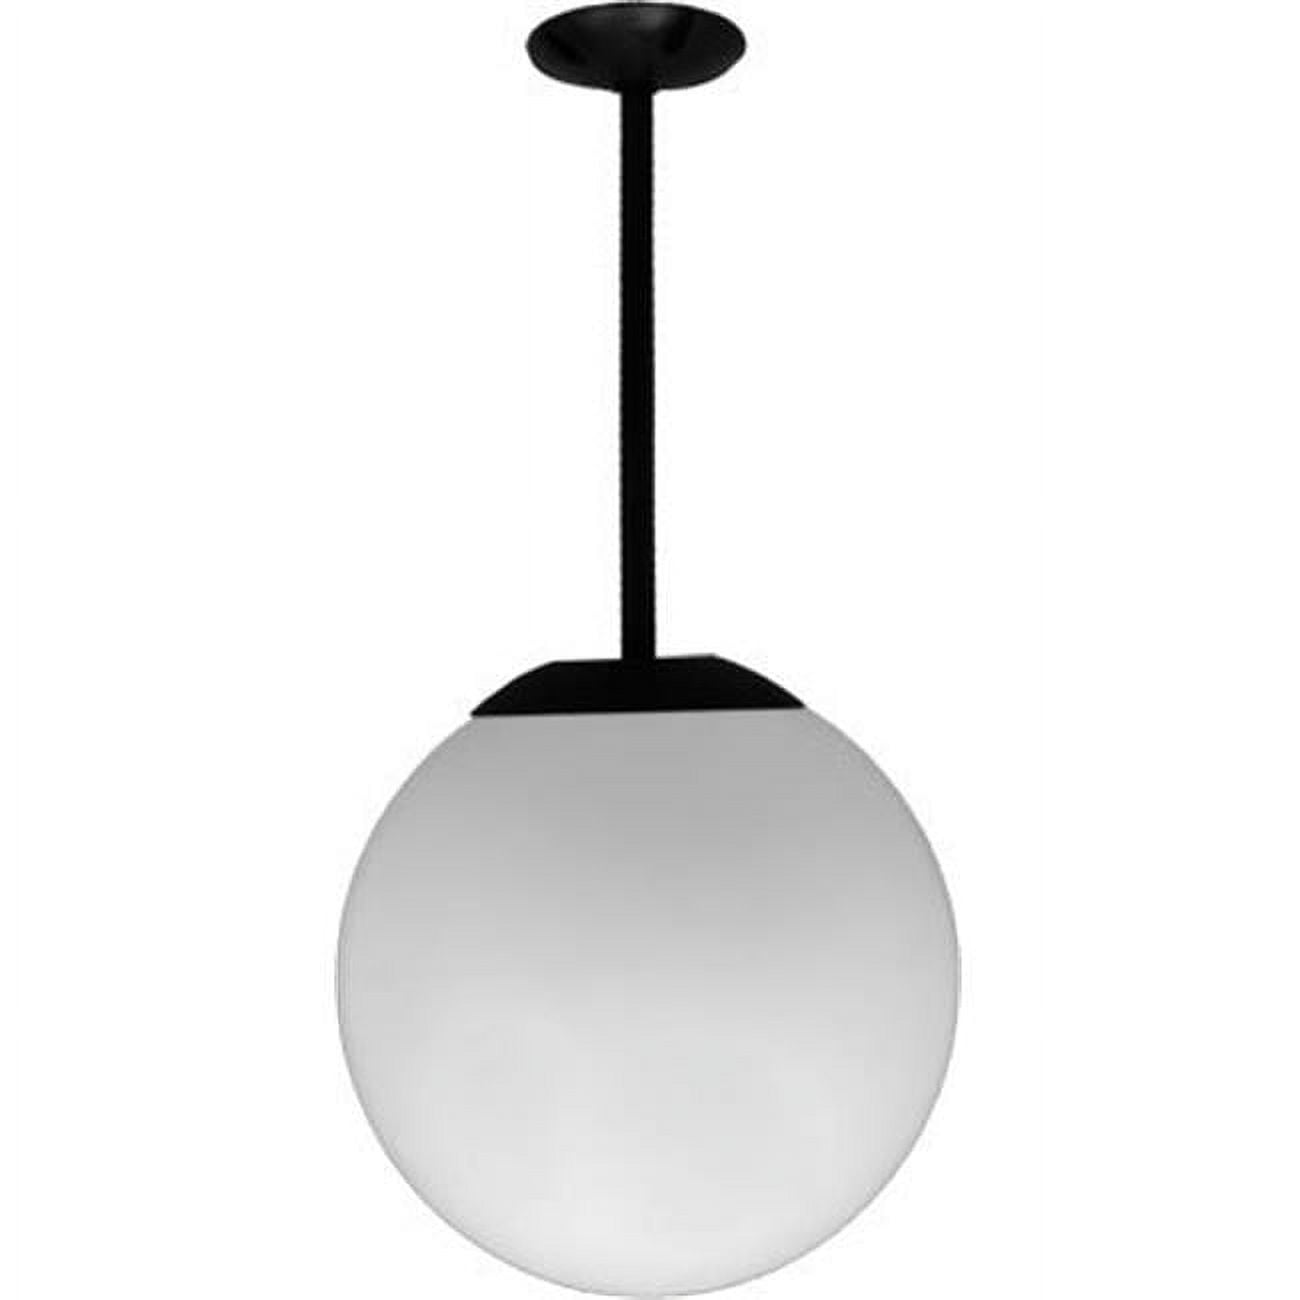 D7515-12-b 16 In. 120 V 50 Watts Ceiling Globe Fixture 12 In. Drop With Metal Halide Lamp, Black